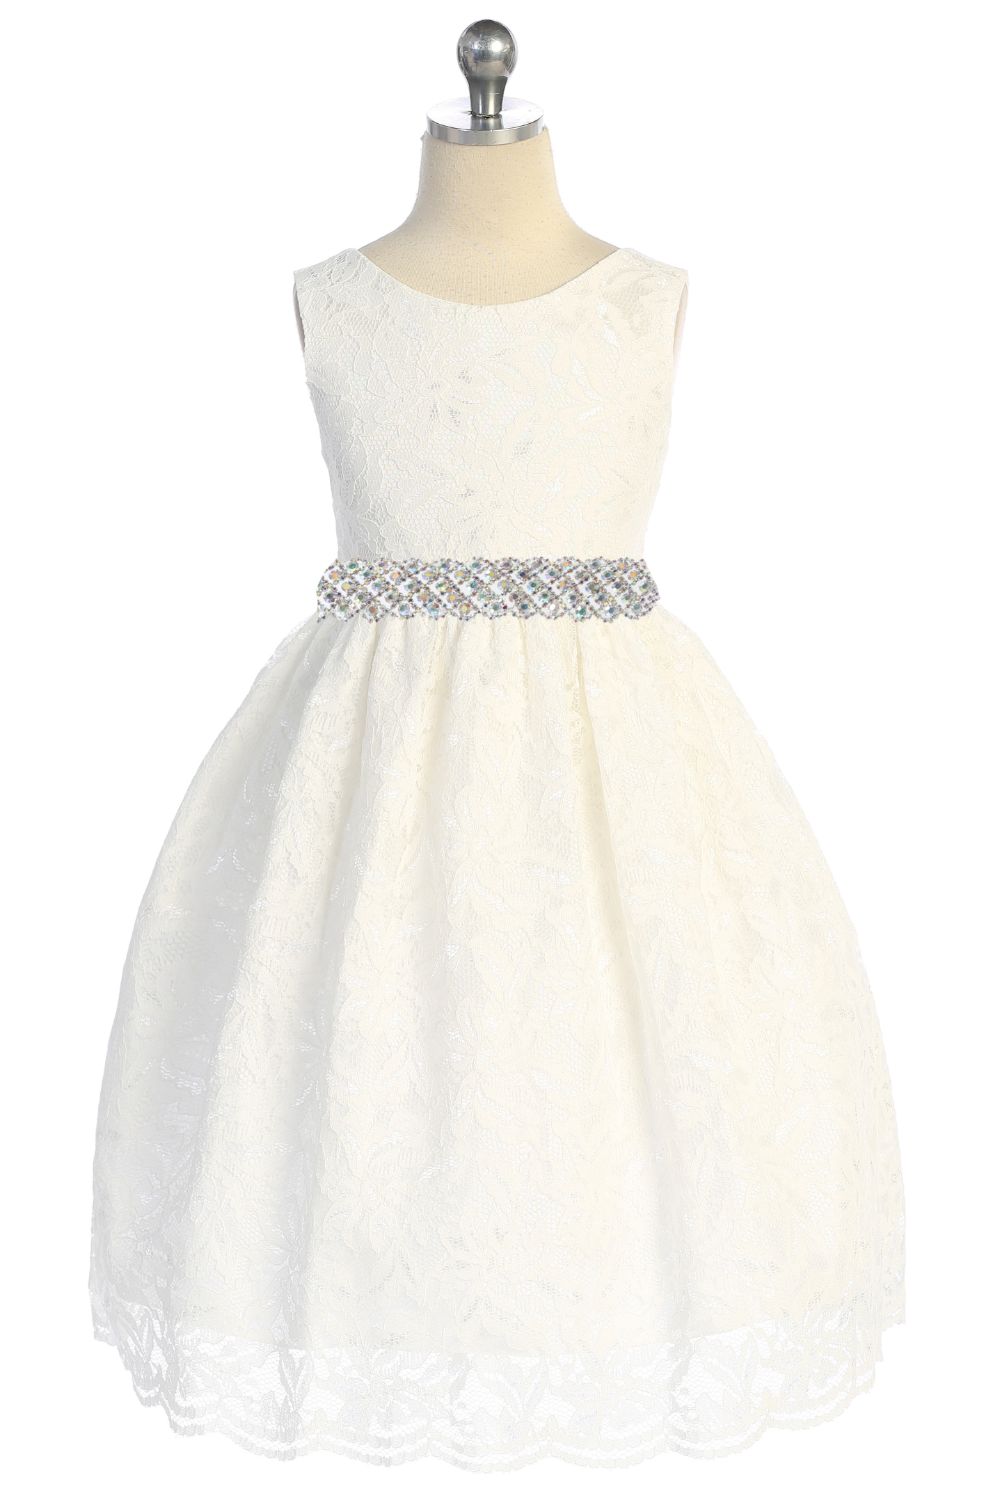 526-E- Lace V Back Bow Plus Size Dress w/ Thick Rhinestone Trim